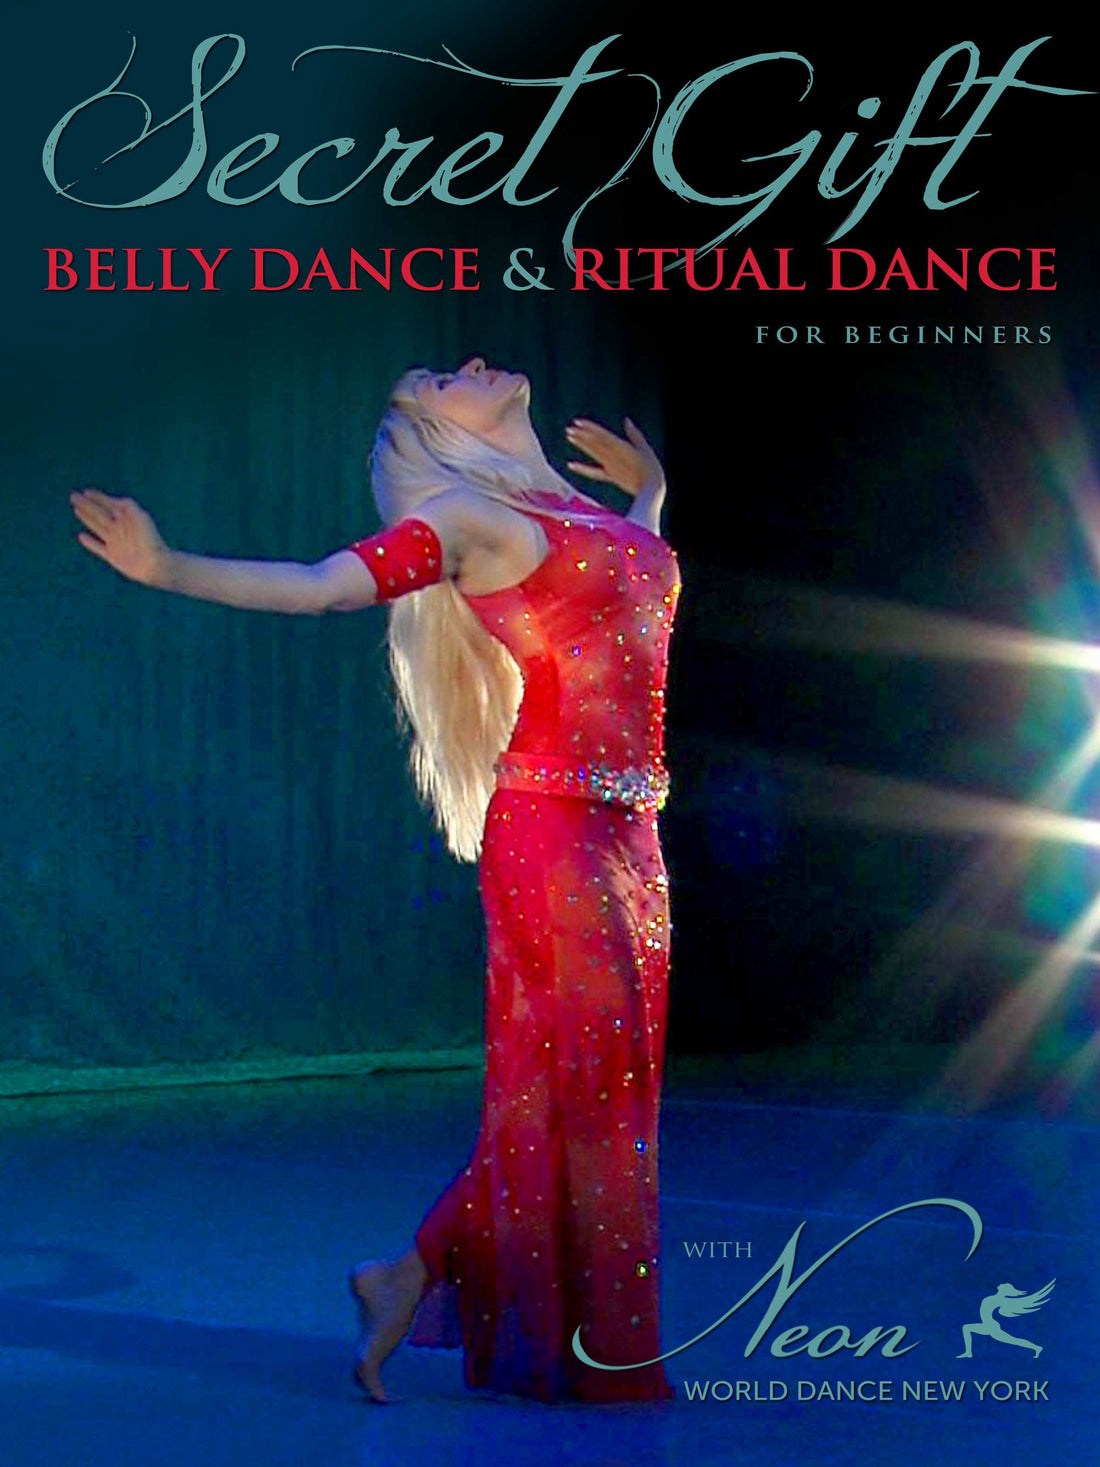 Secret Gift - Belly Dance & Ritual Dance for Beginners with Neon - World Dance New York